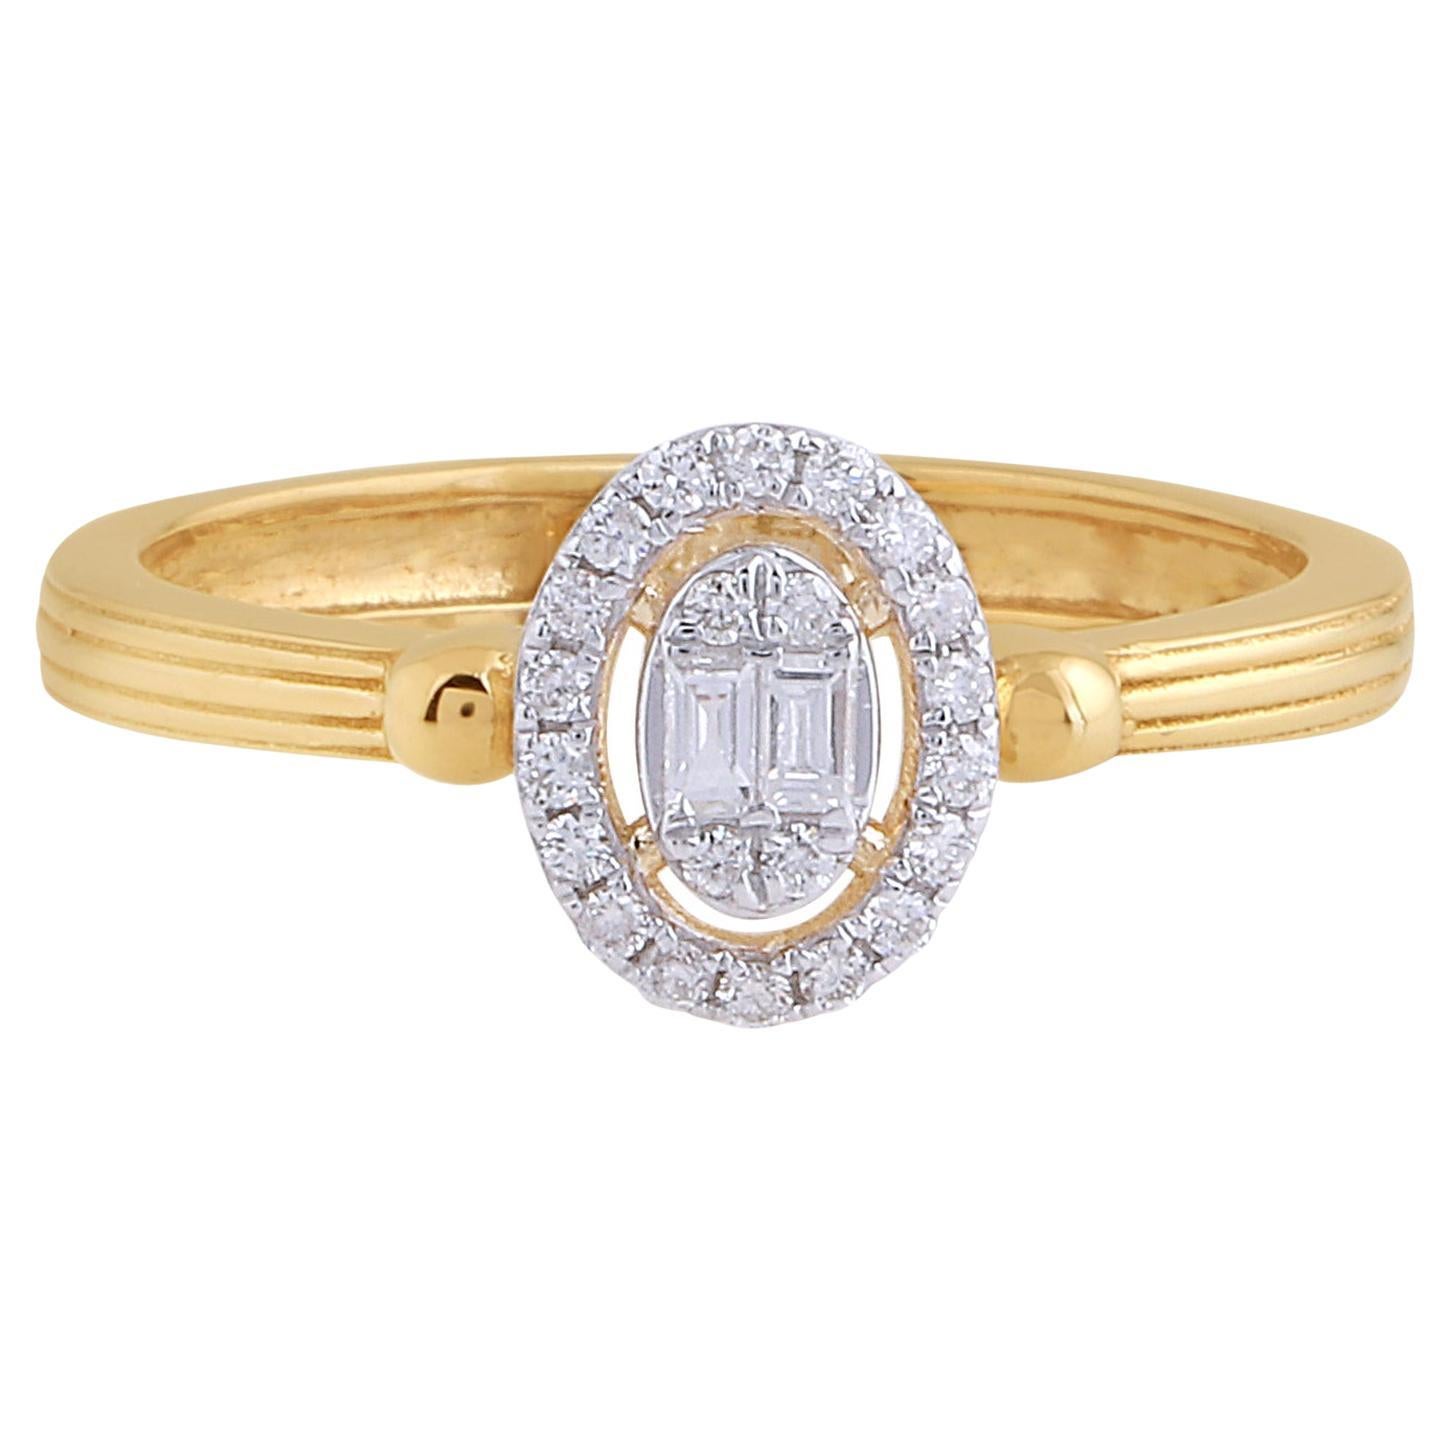 0.16 Carat Baguette Diamond Ring Solid 18 Karat Yellow Gold Handmade Jewelry